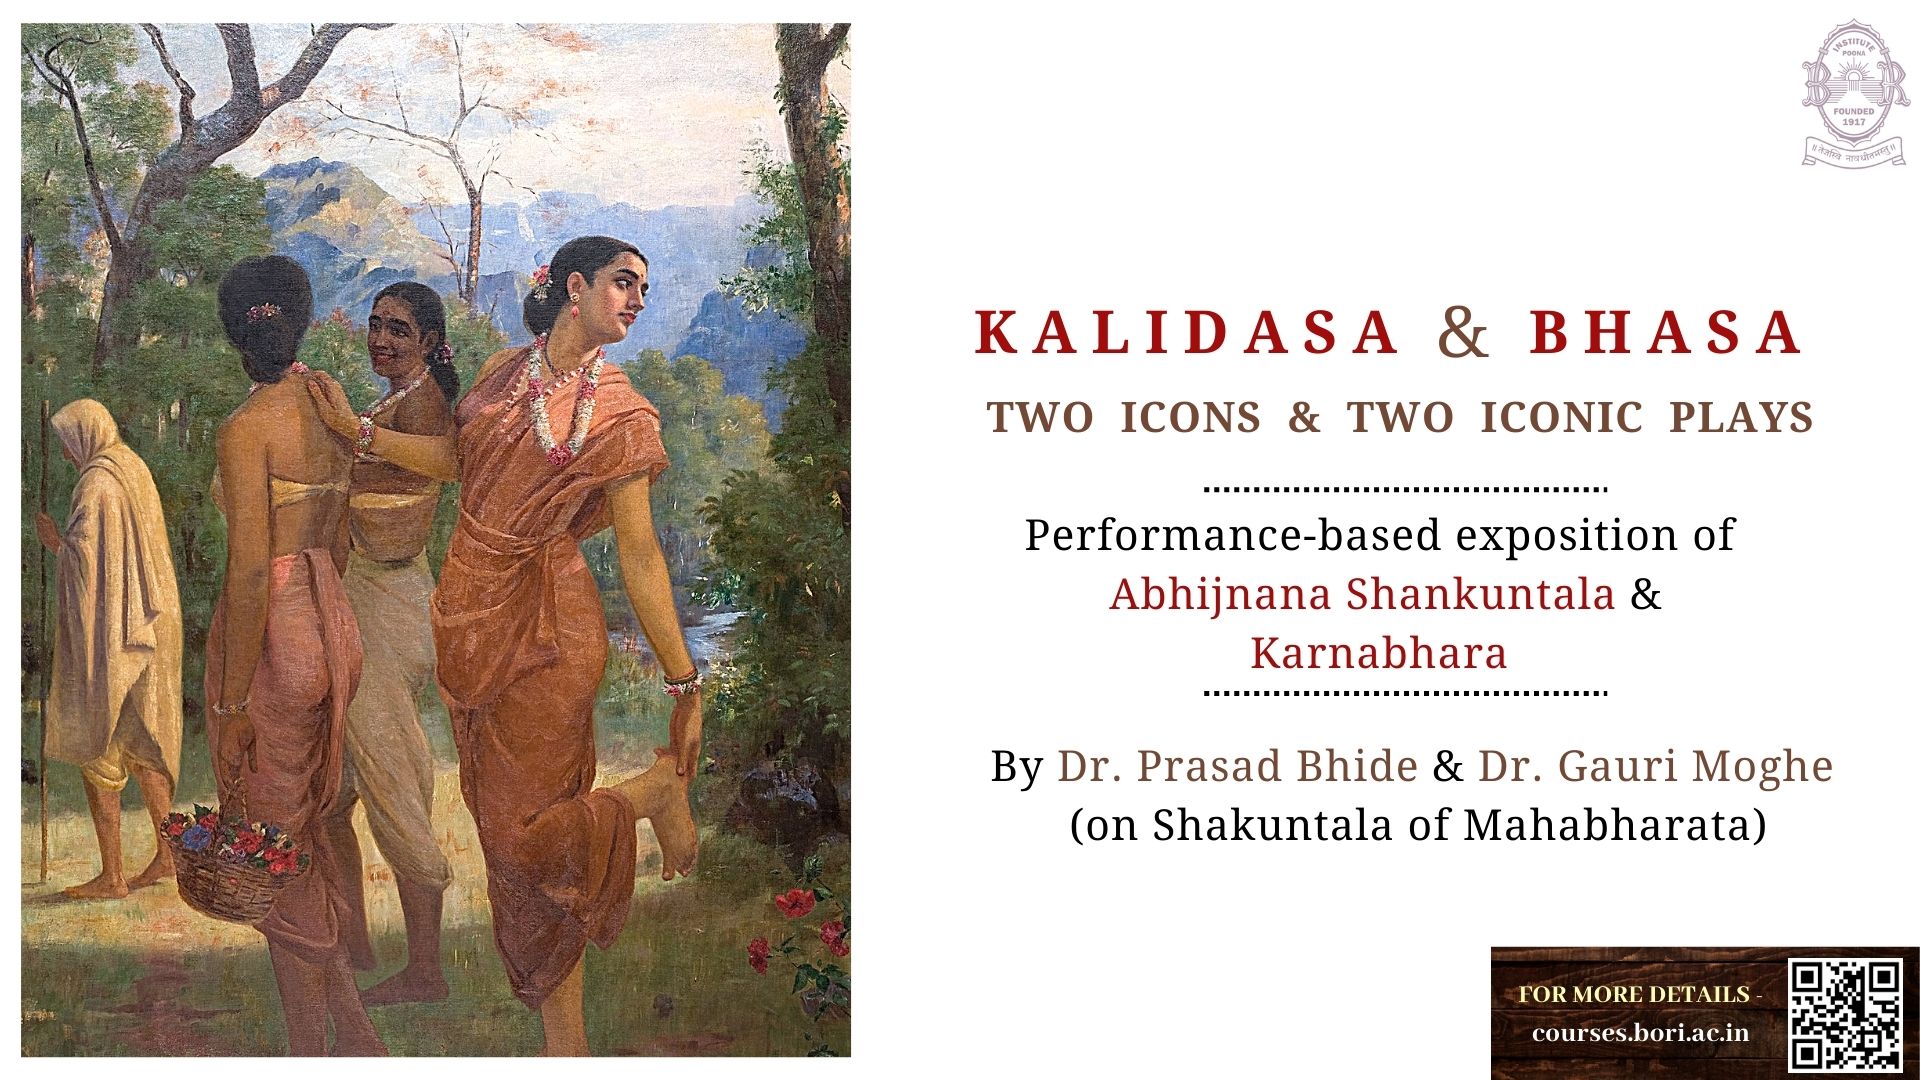 Kalidasa & Bhasa: Two icons & two iconic plays